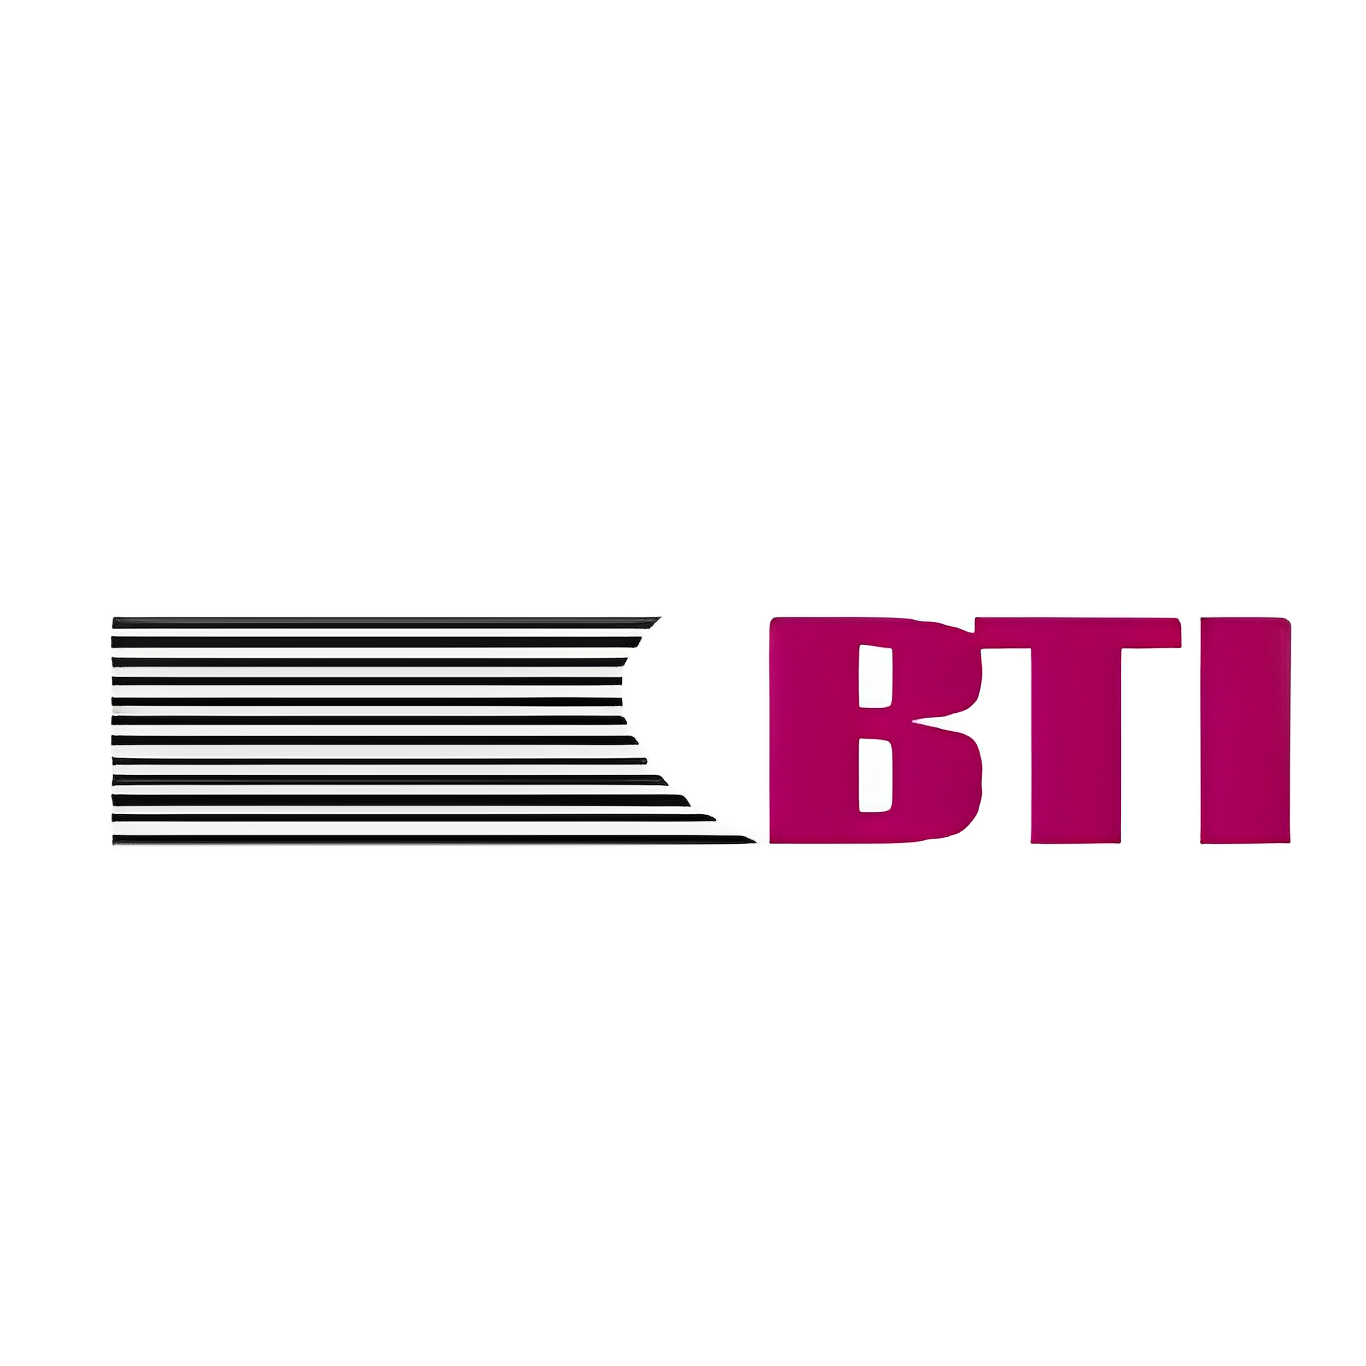 BTISOLATSIOON OÜ logo